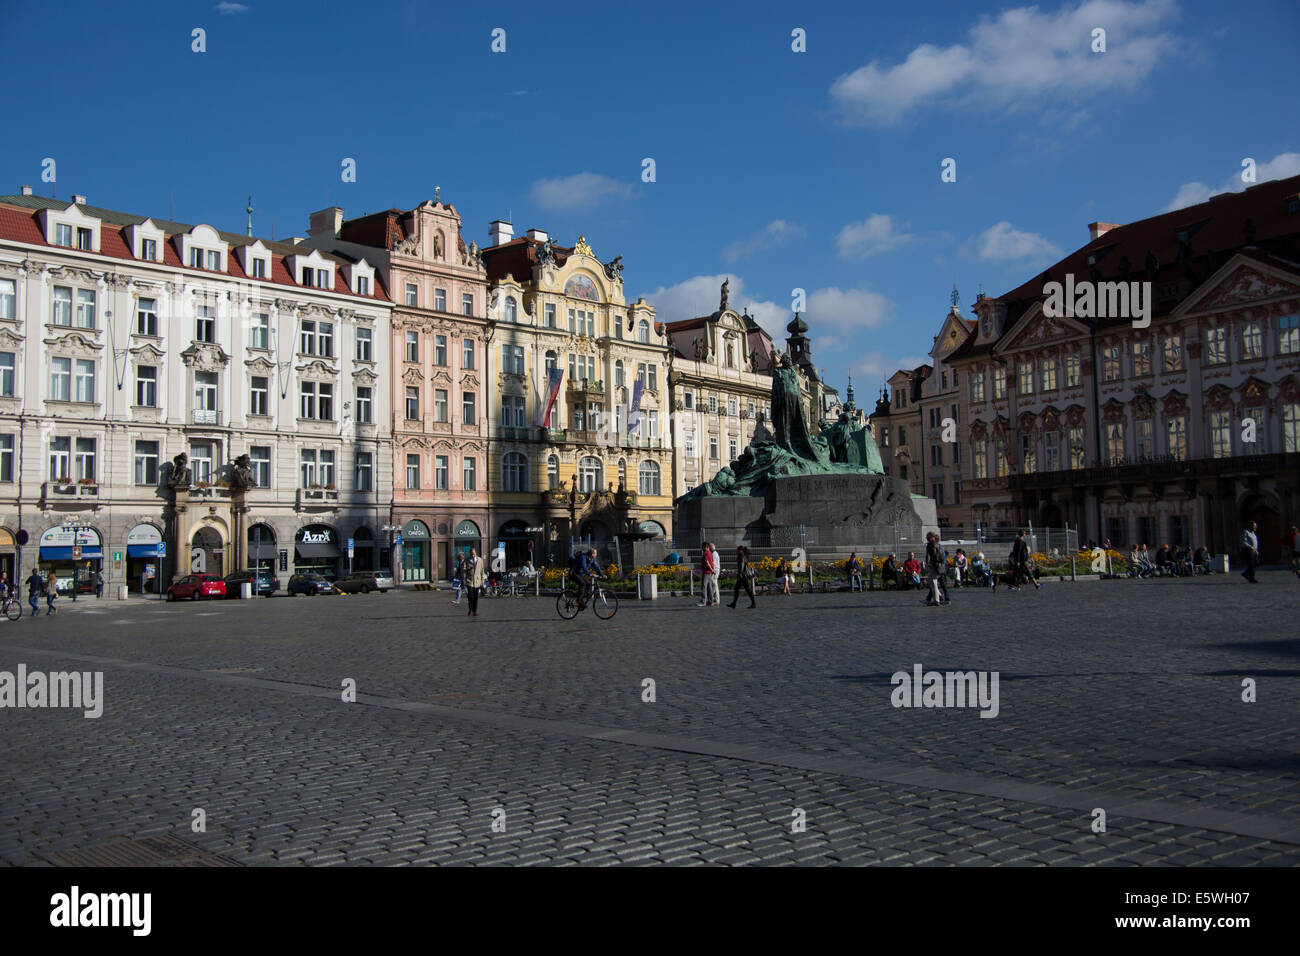 The town square of Prague, Czech Republic Stock Photo